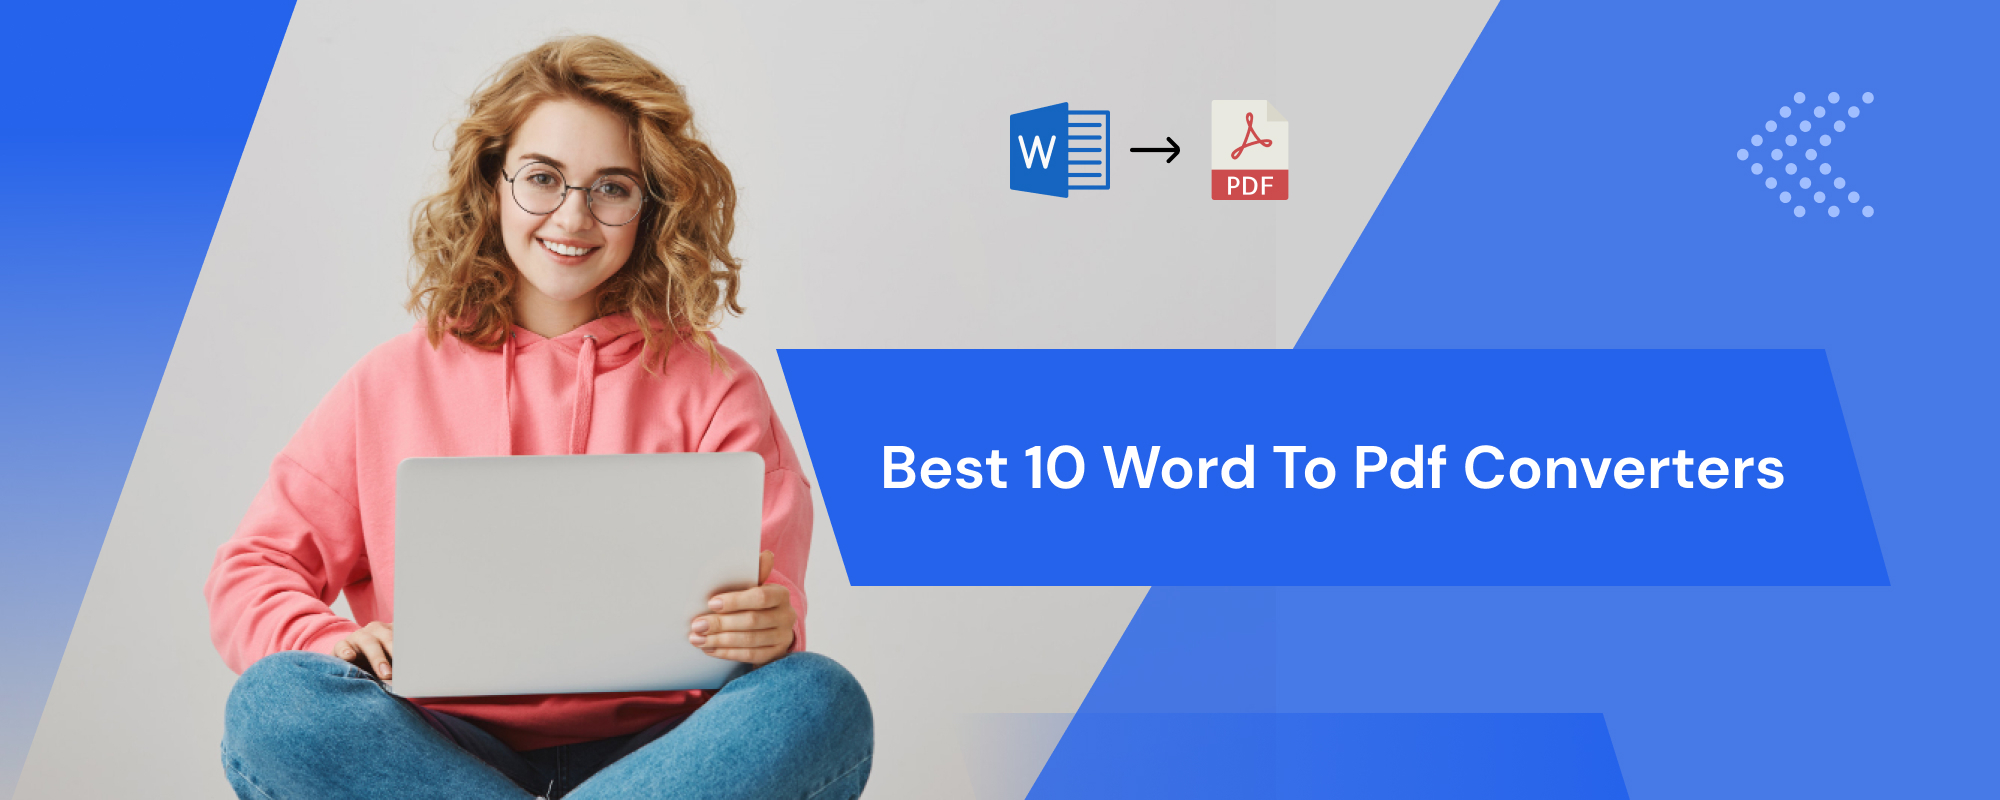 Best 10 word to pdf converters